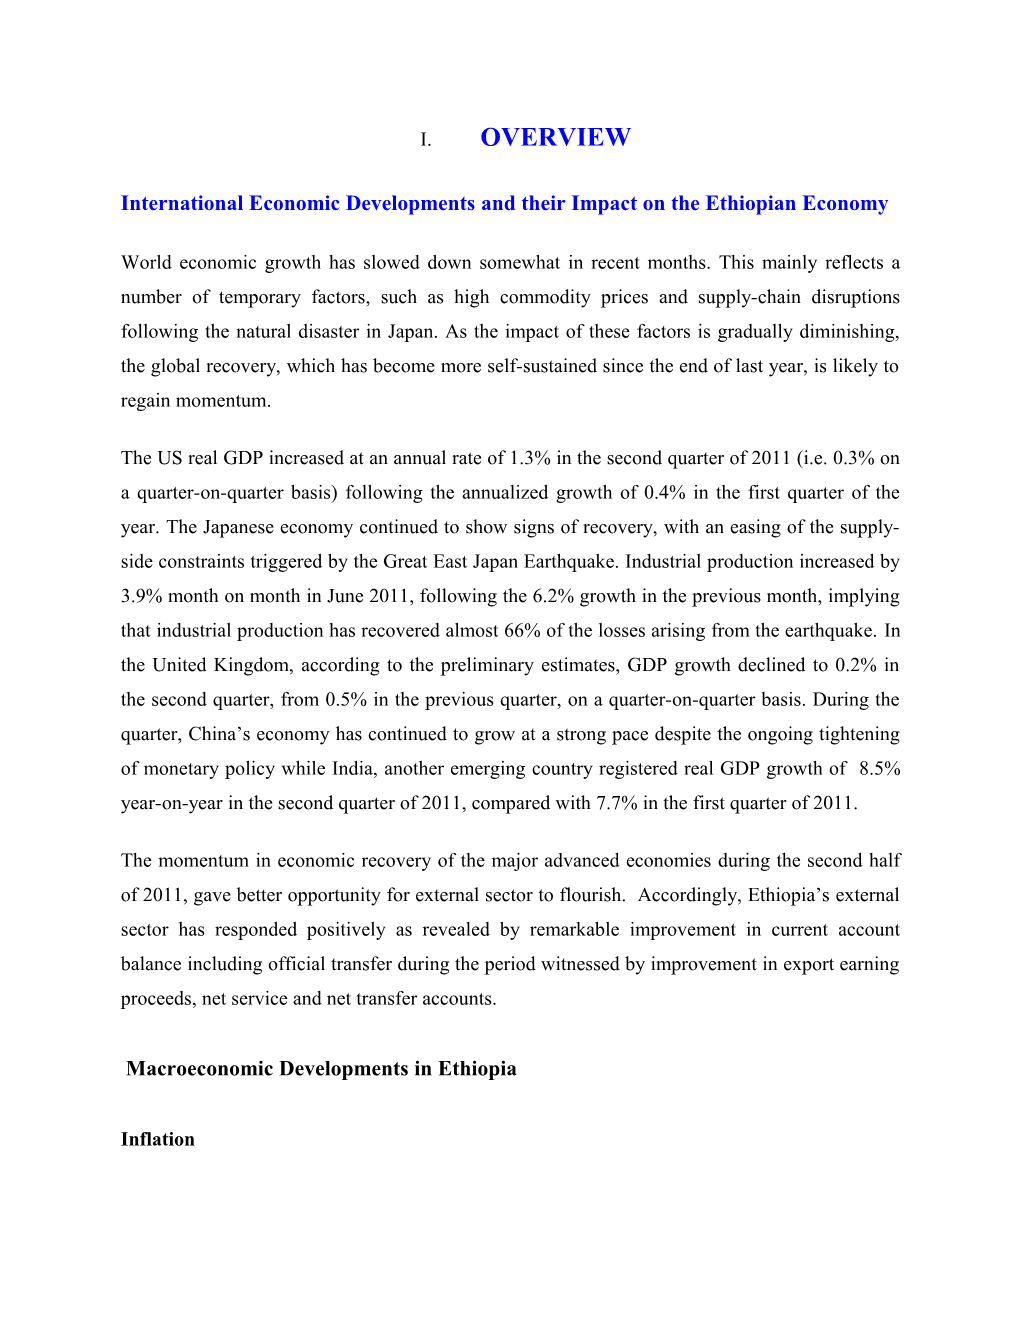 International Economic Developments and Their Impact on the Ethiopian Economy